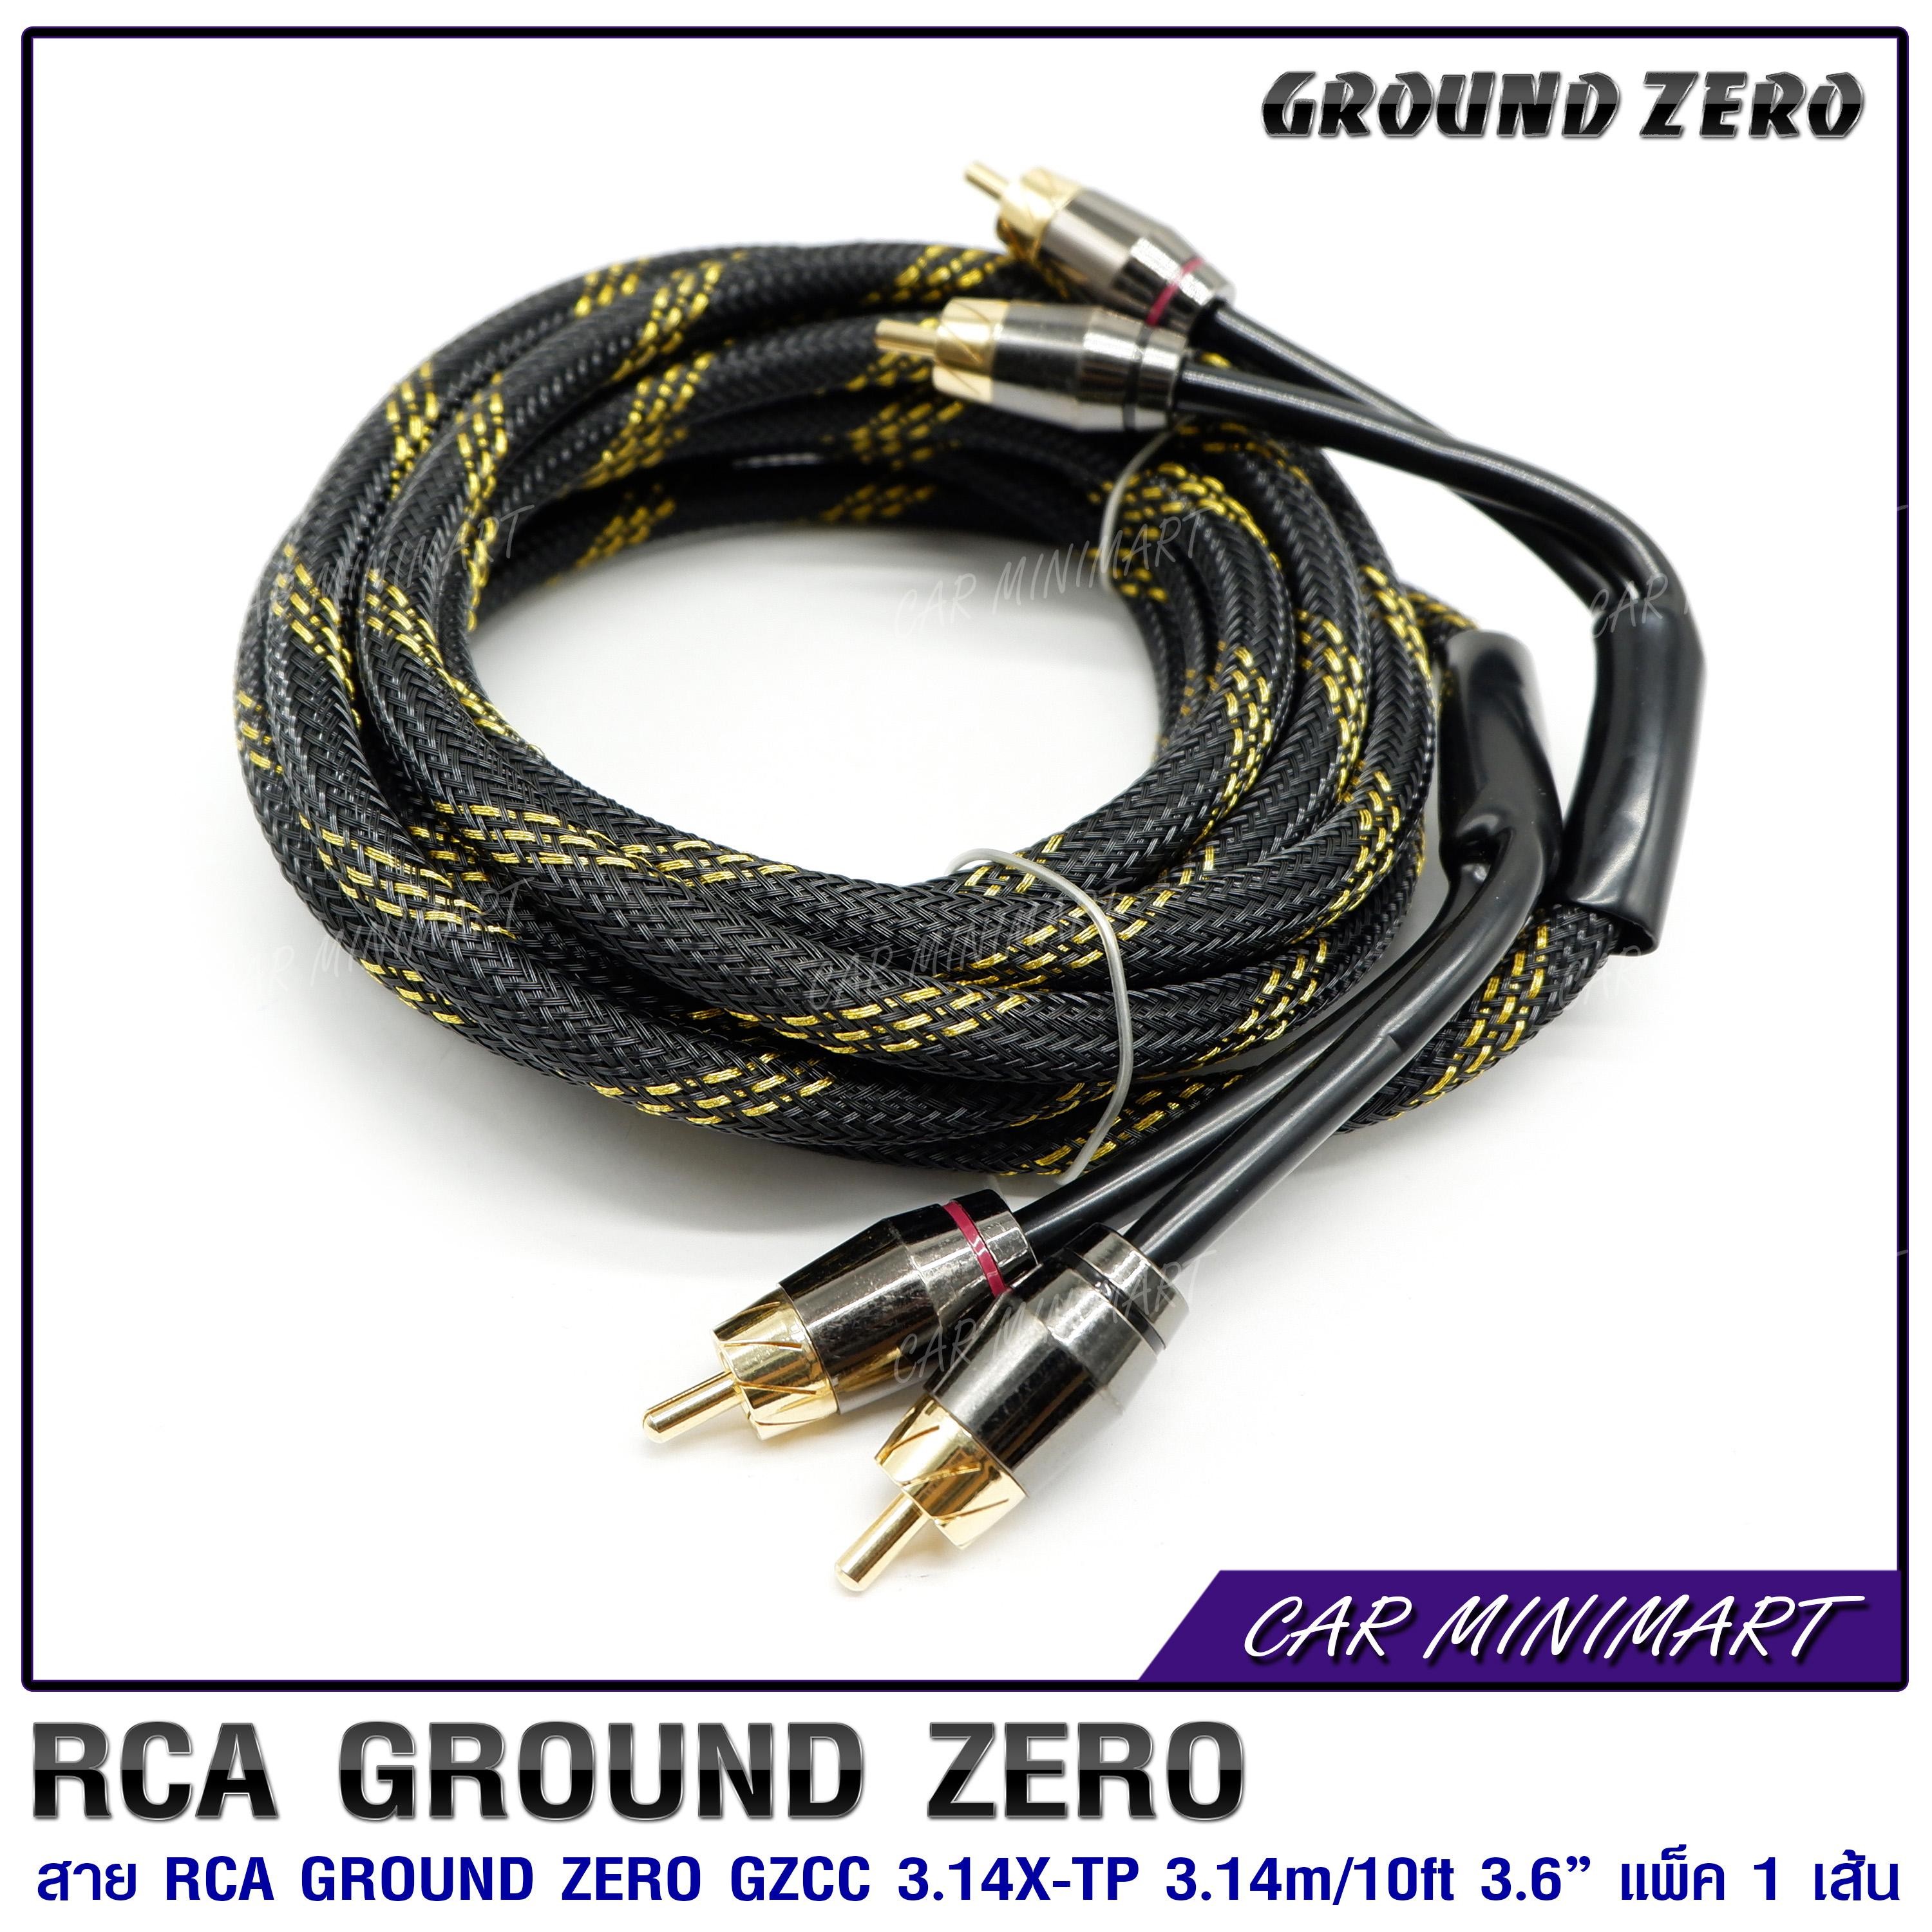 Ground Zero สาย RCA 4 หัว (สายถัก) High-End RCA Cable ขนาด 3.14 เมตร GZCC 3.14X-TP / แพ็ค 1 เส้น